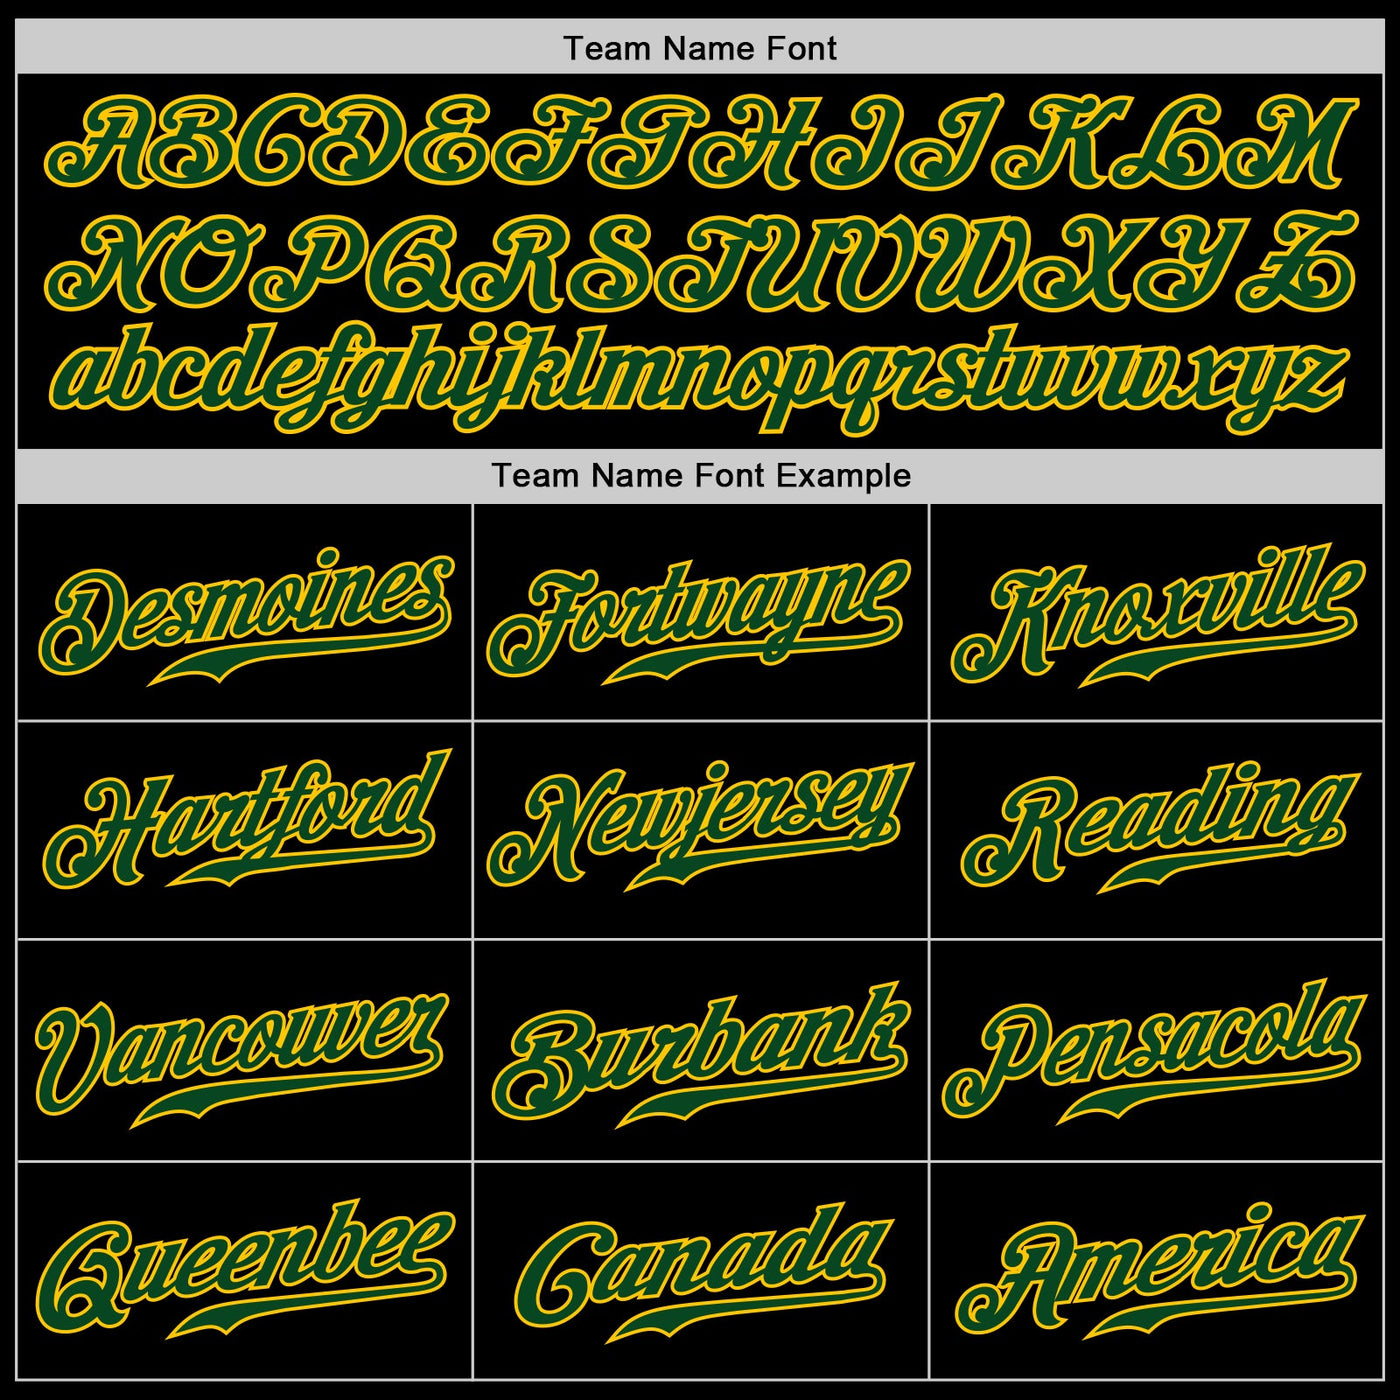 Custom Black Green-Gold Authentic Baseball Jersey - Owls Matrix LTD